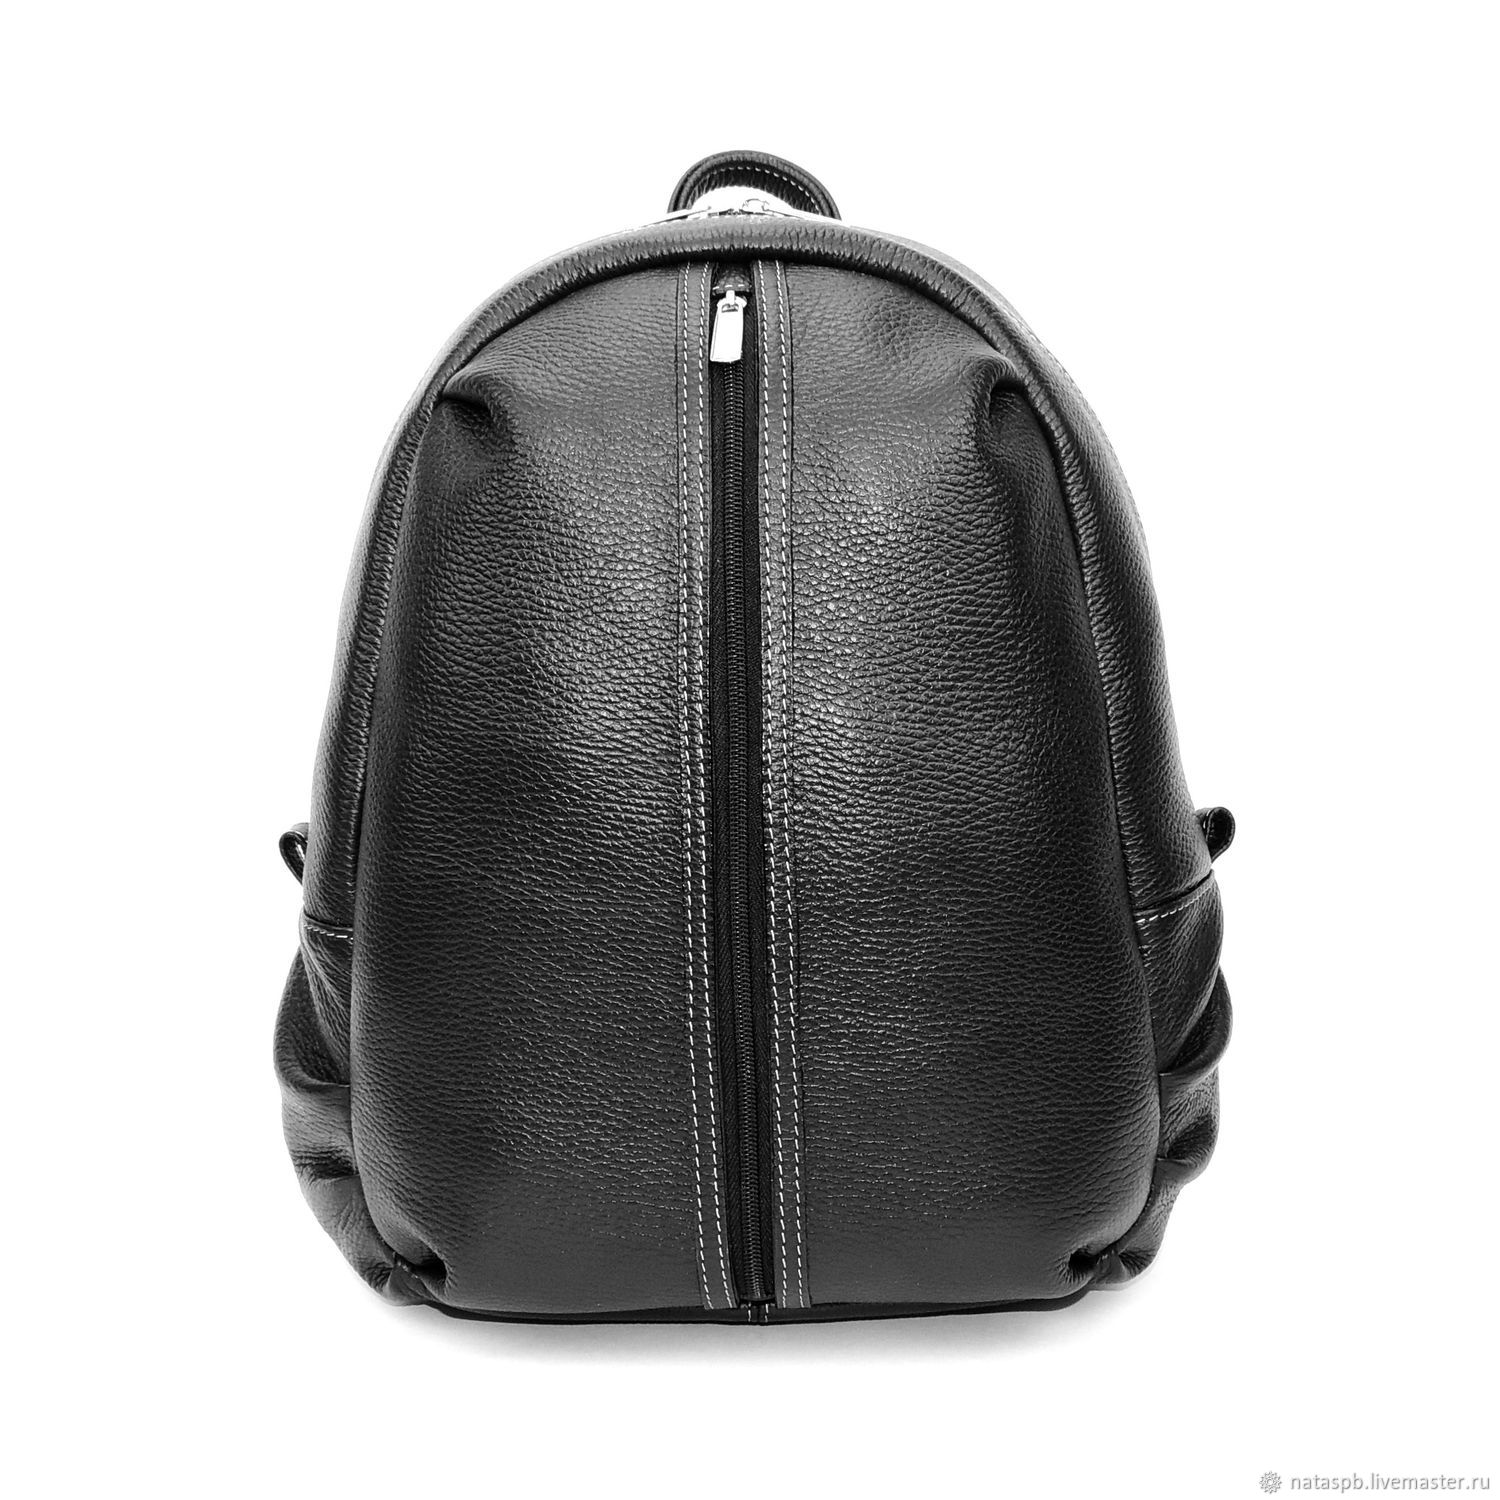 Backpack leather black Urban Fashion R41-111, Backpacks, St. Petersburg,  Фото №1